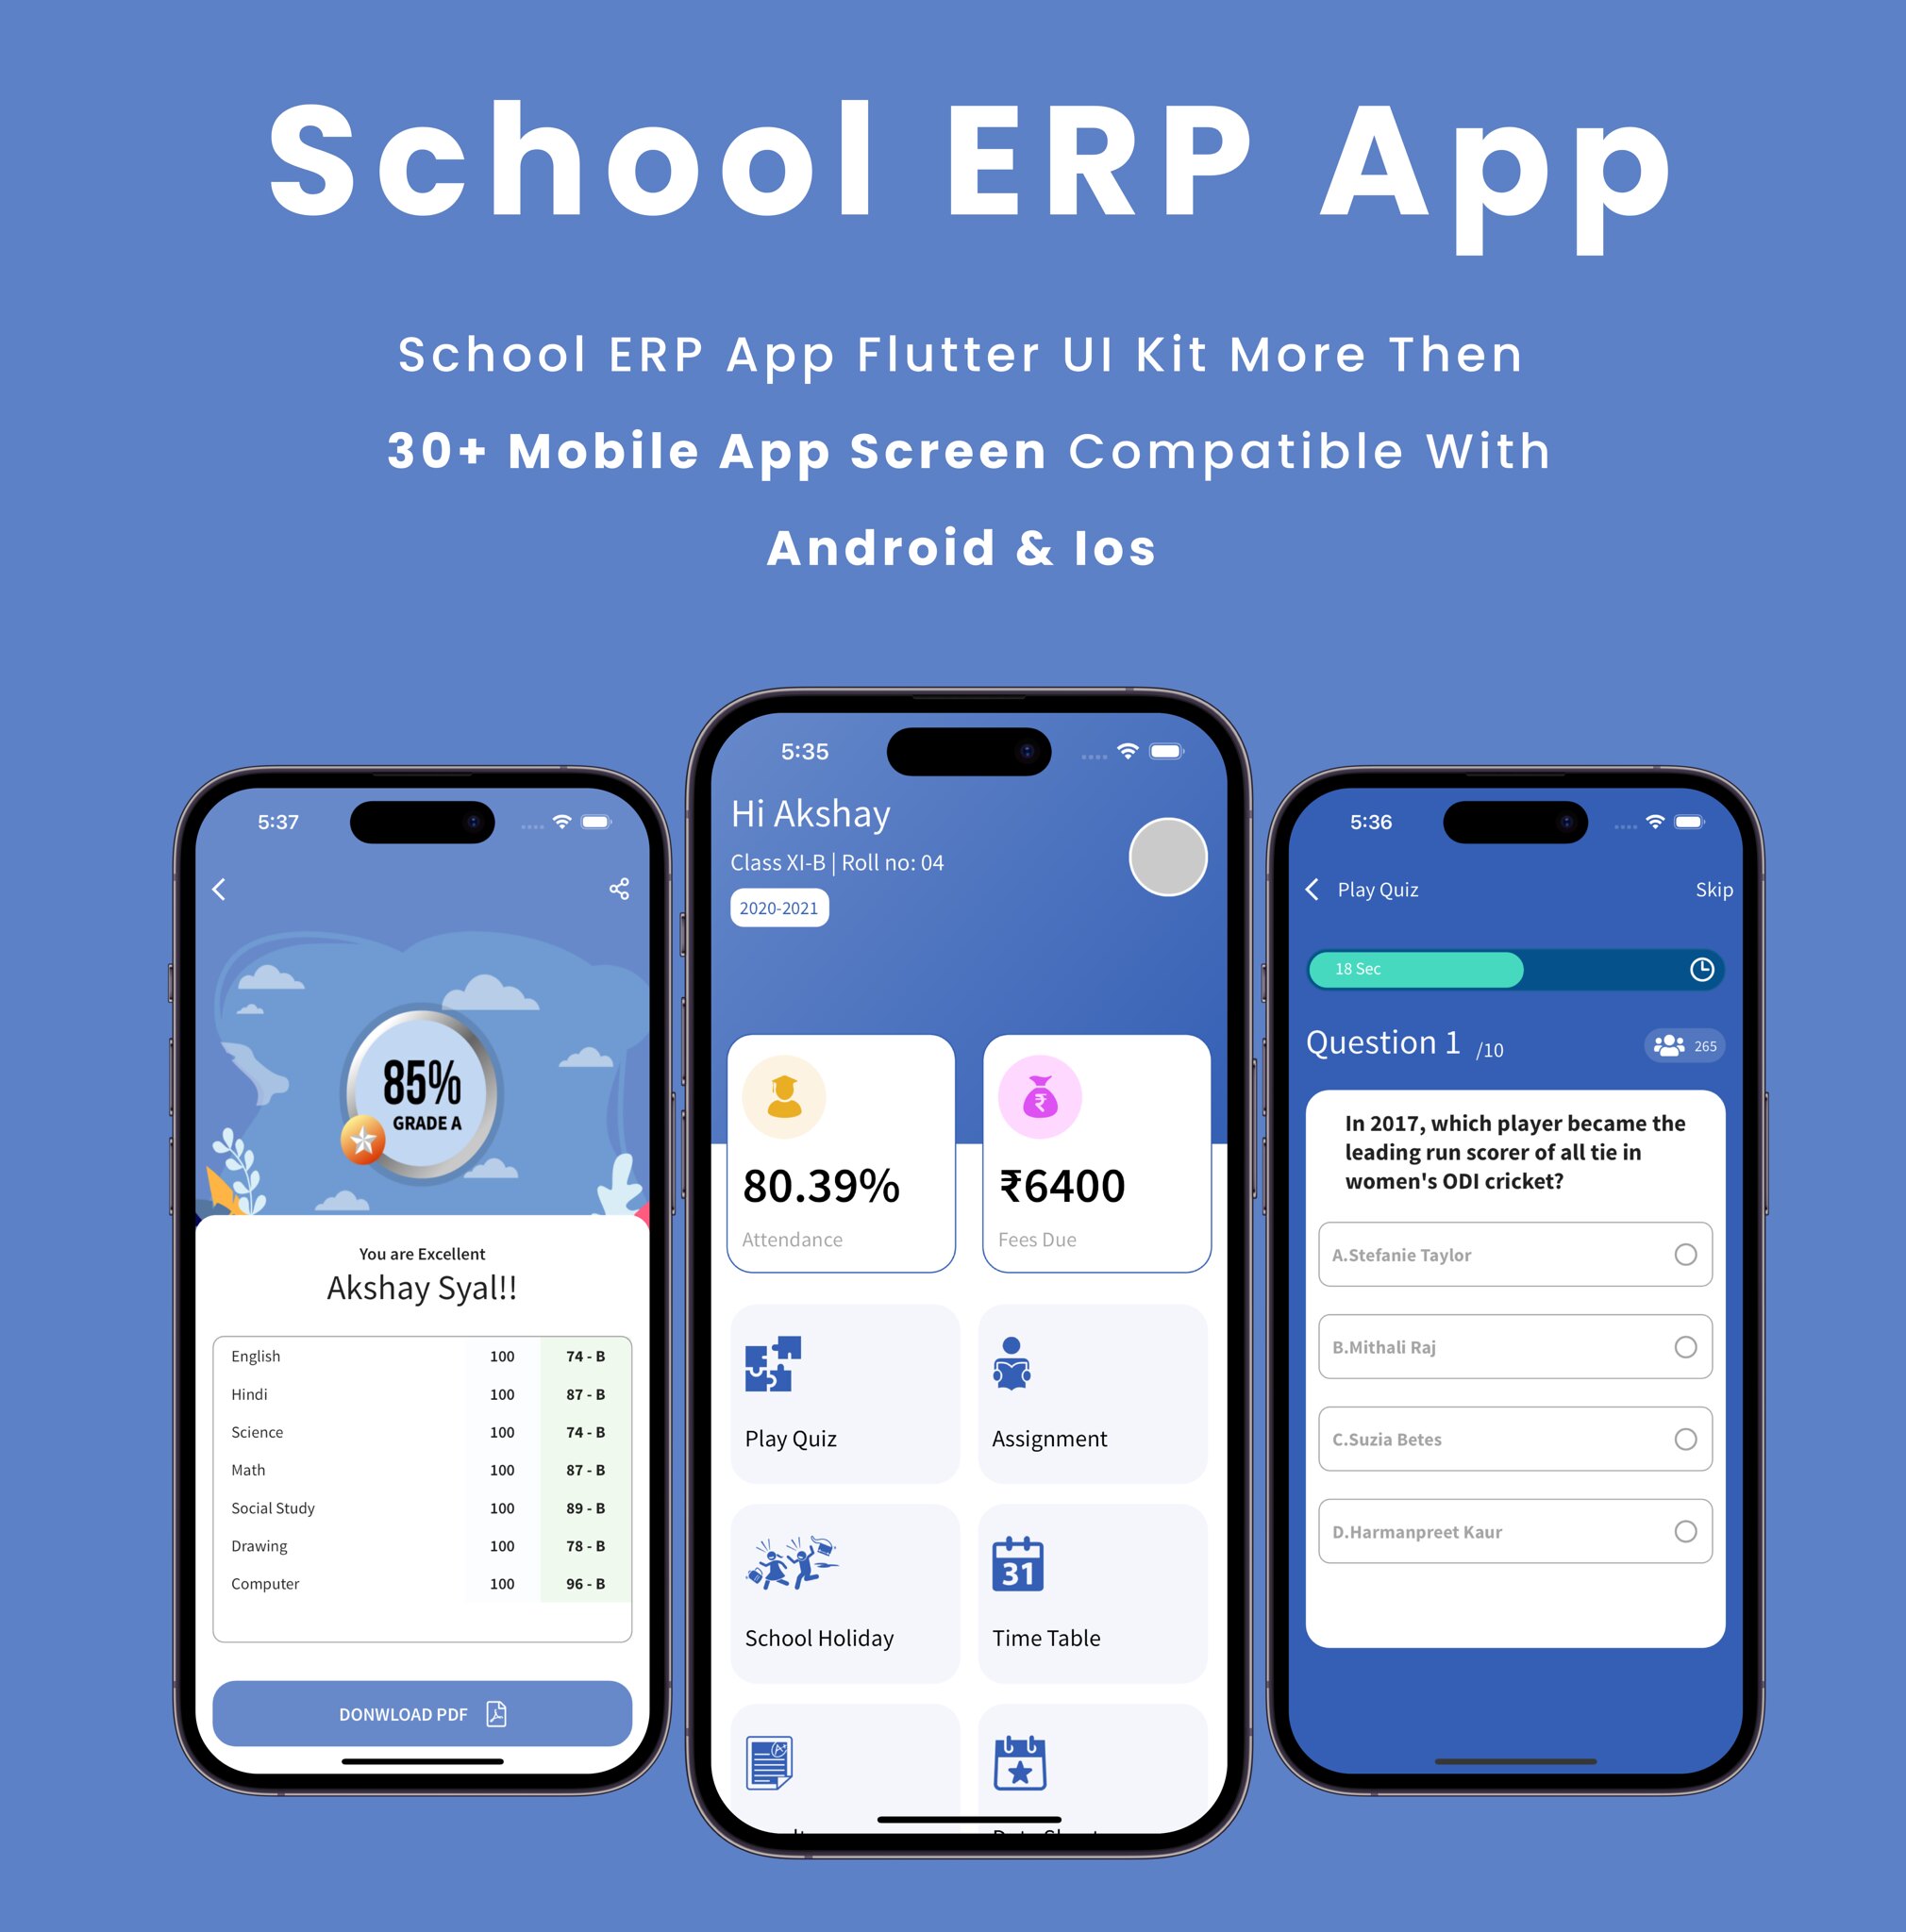 School ERP App - Flutter Mobile App Template